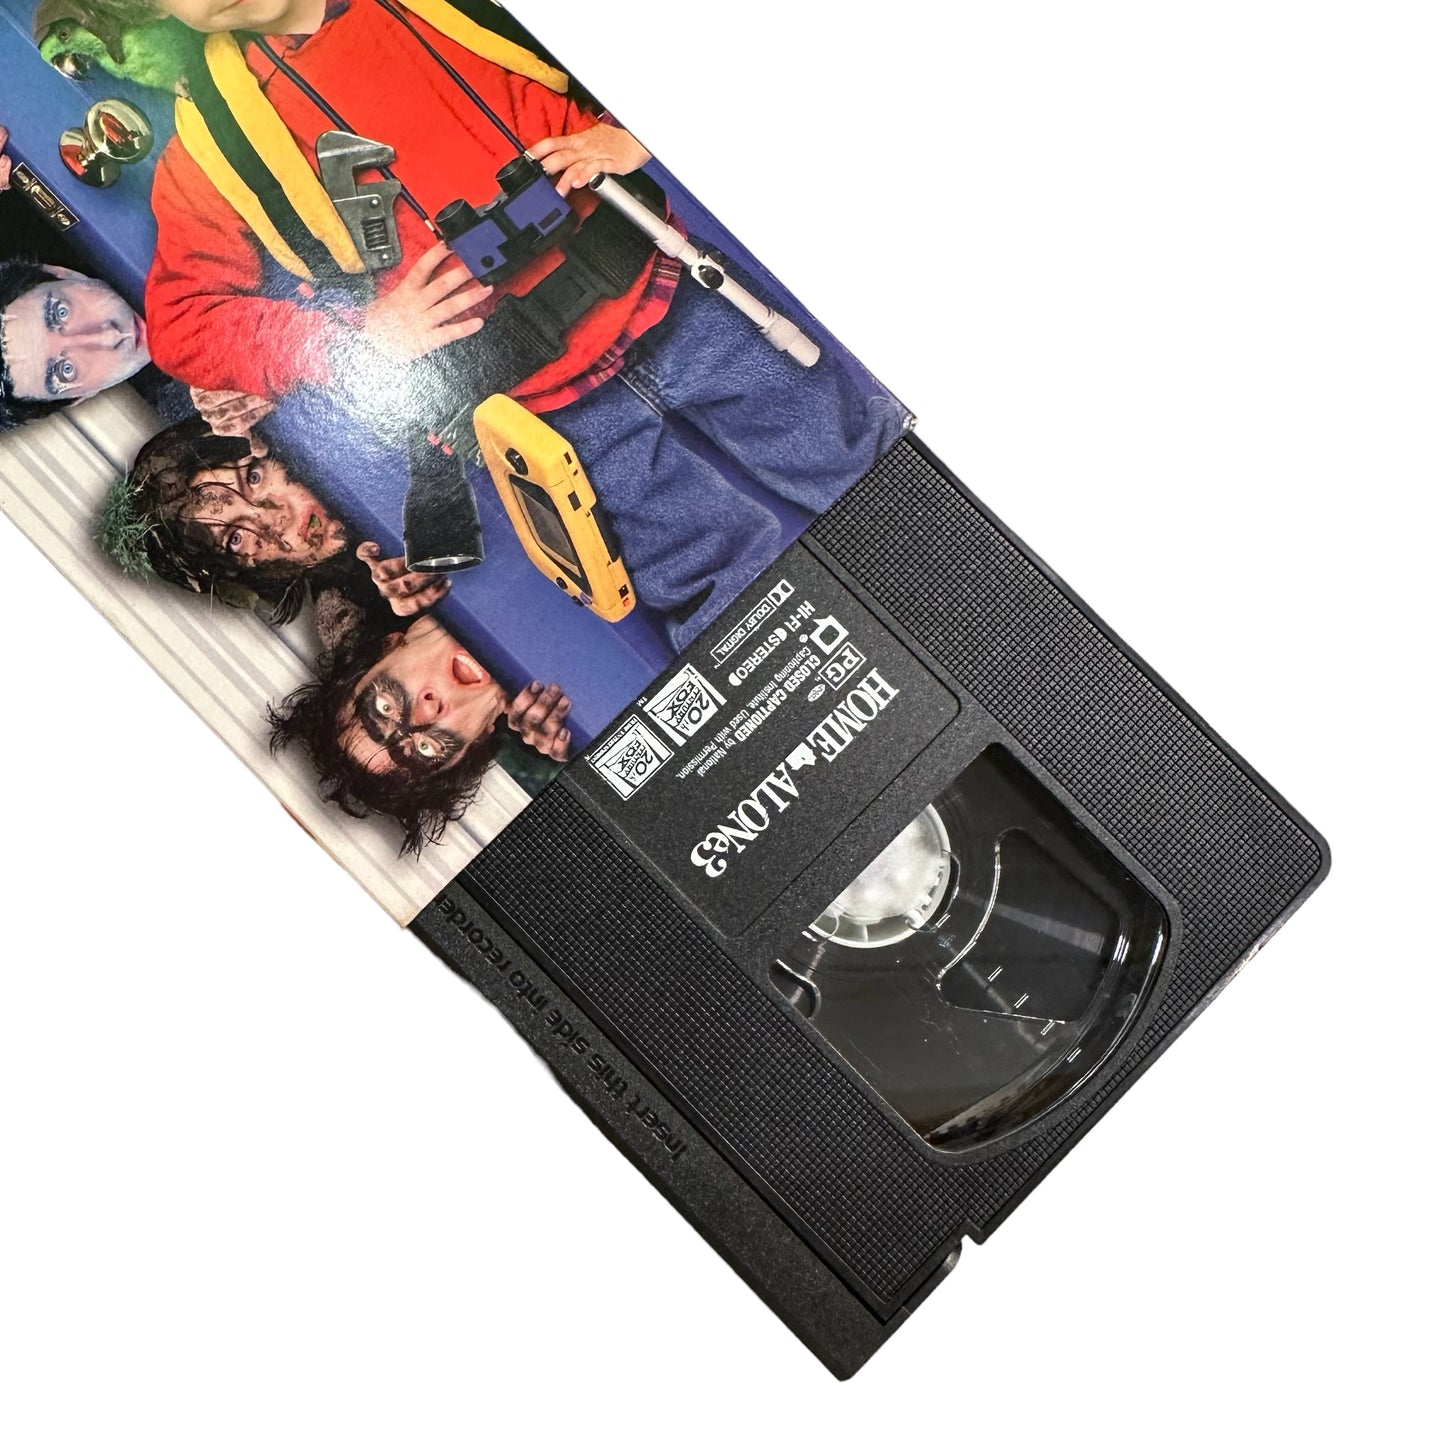 VHS ビデオテープ 輸入版 ホーム・アローン3 Home AloneⅢ 海外版 USA アメリカ ヴィンテージ ビデオ 紙ジャケ